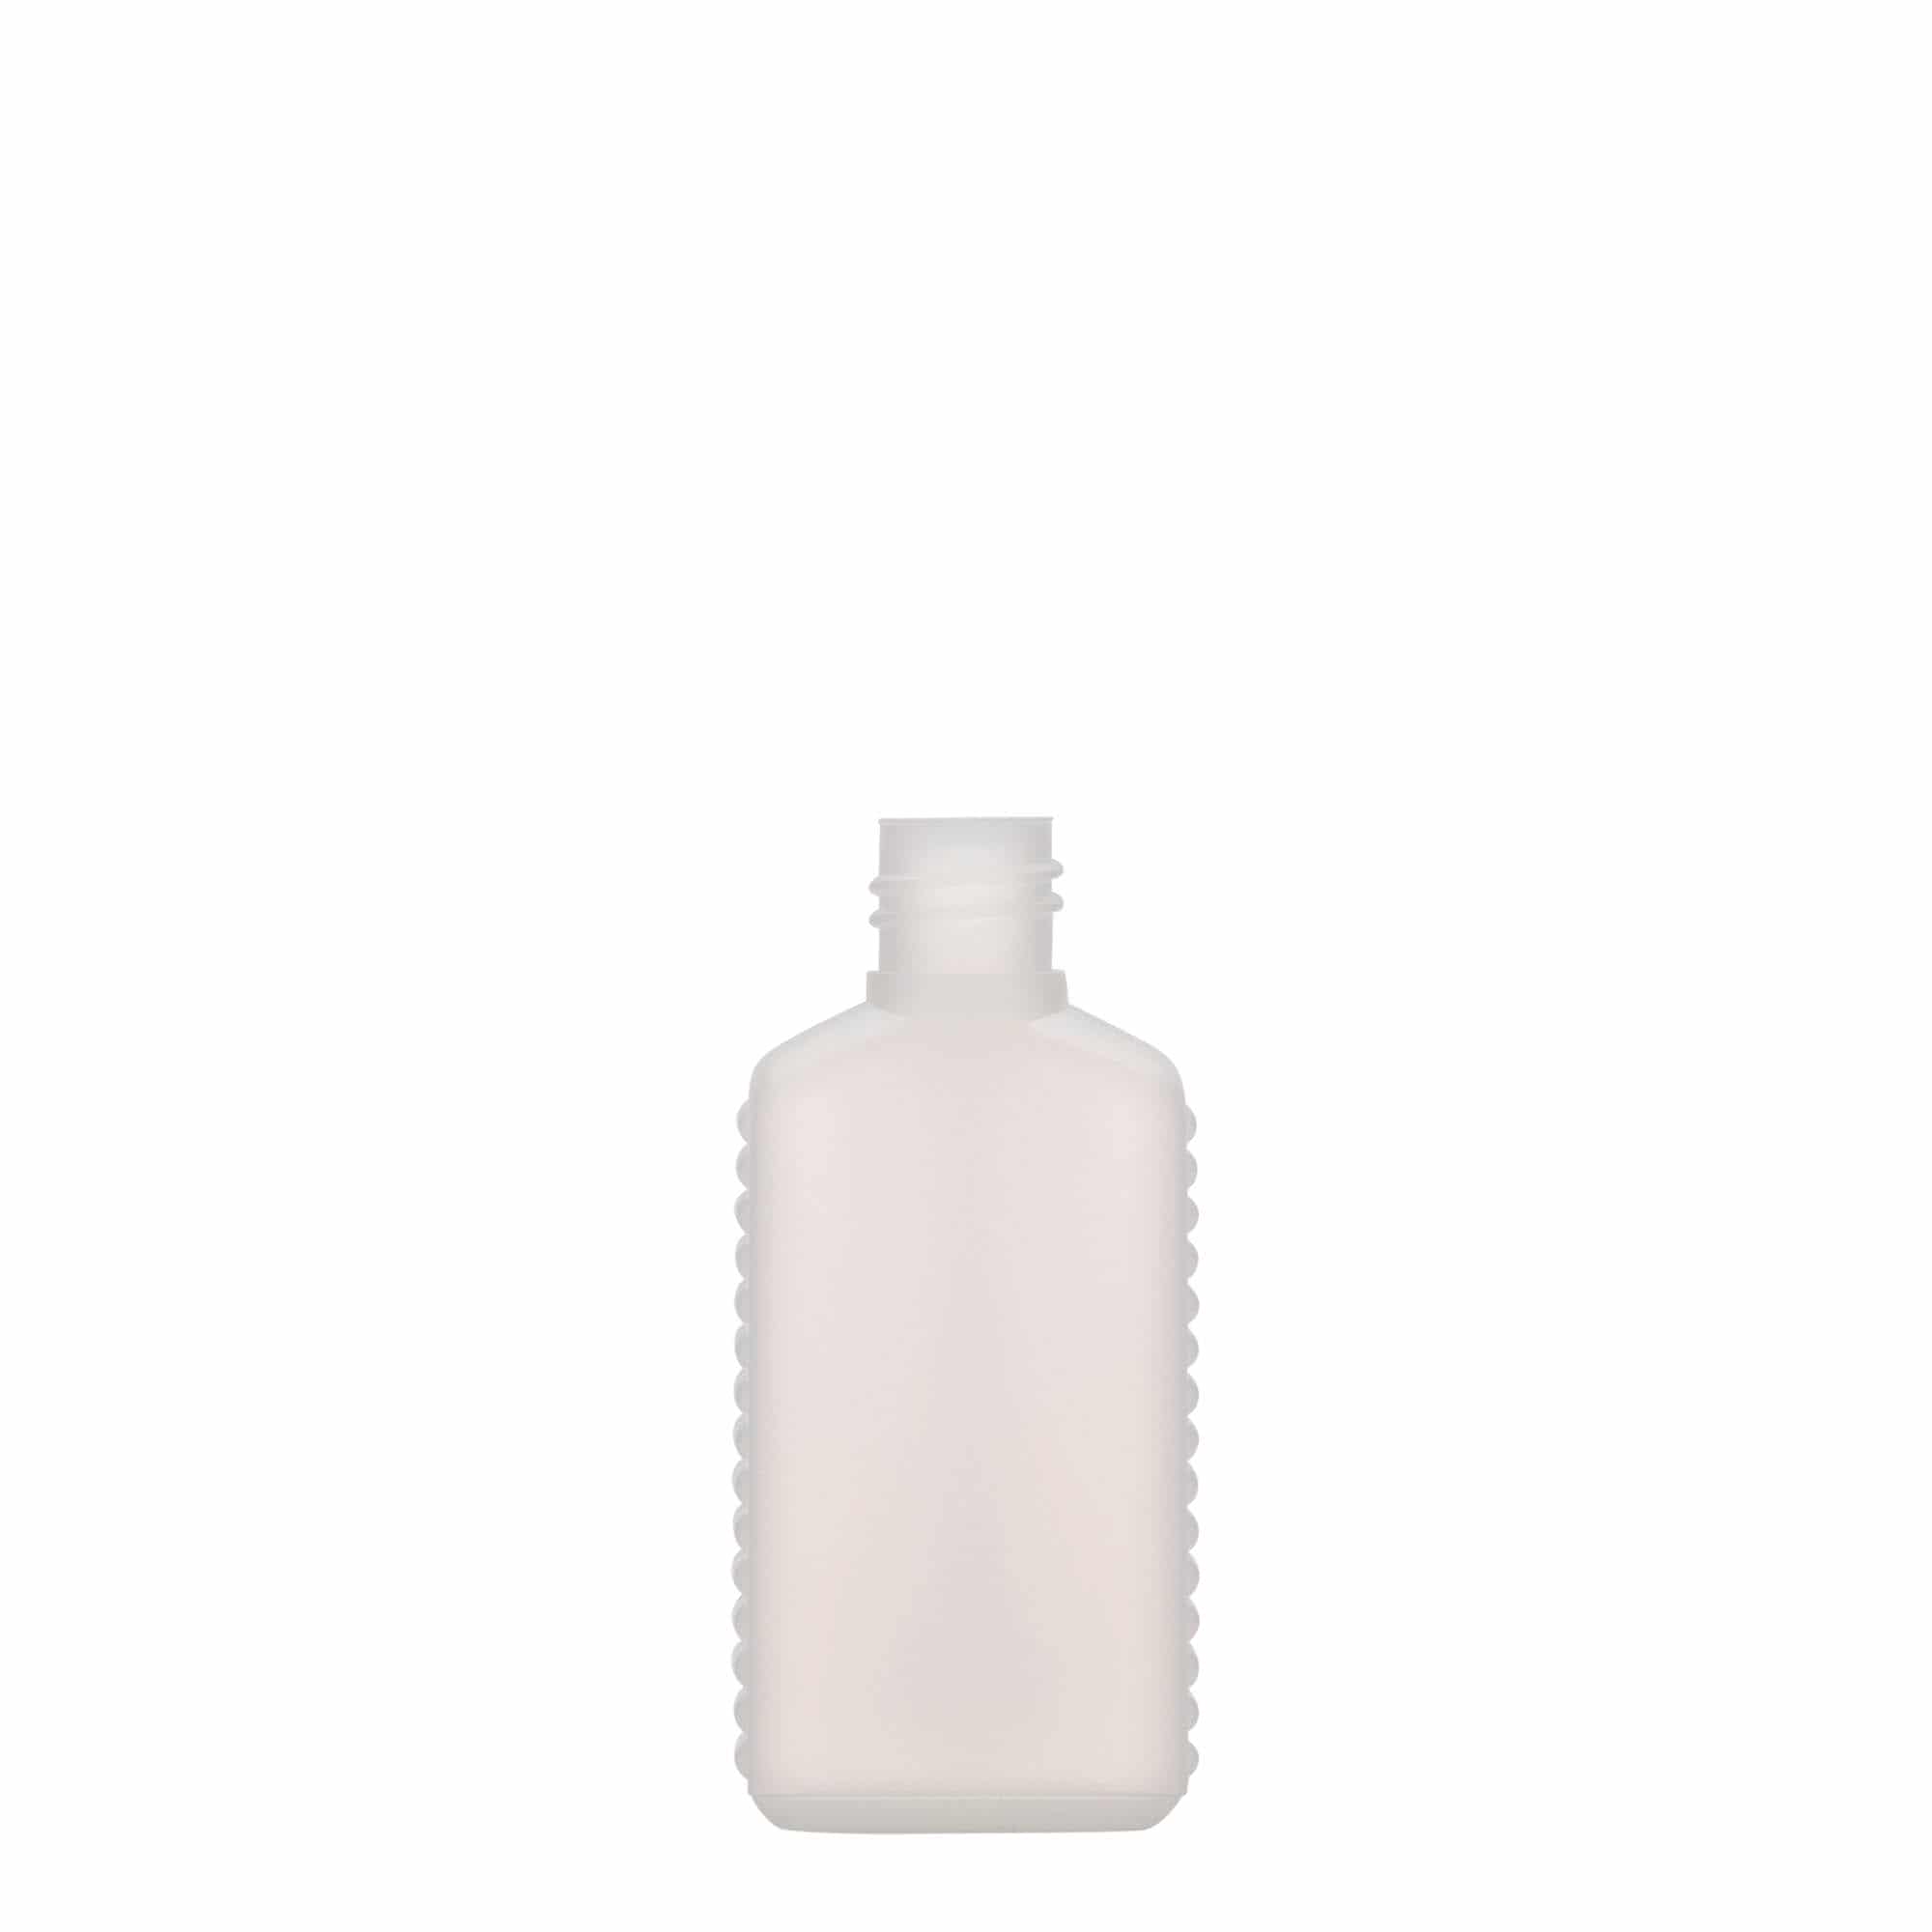 50 ml narrow neck canister bottle, rectangular, HDPE plastic, natural, closure: DIN 18